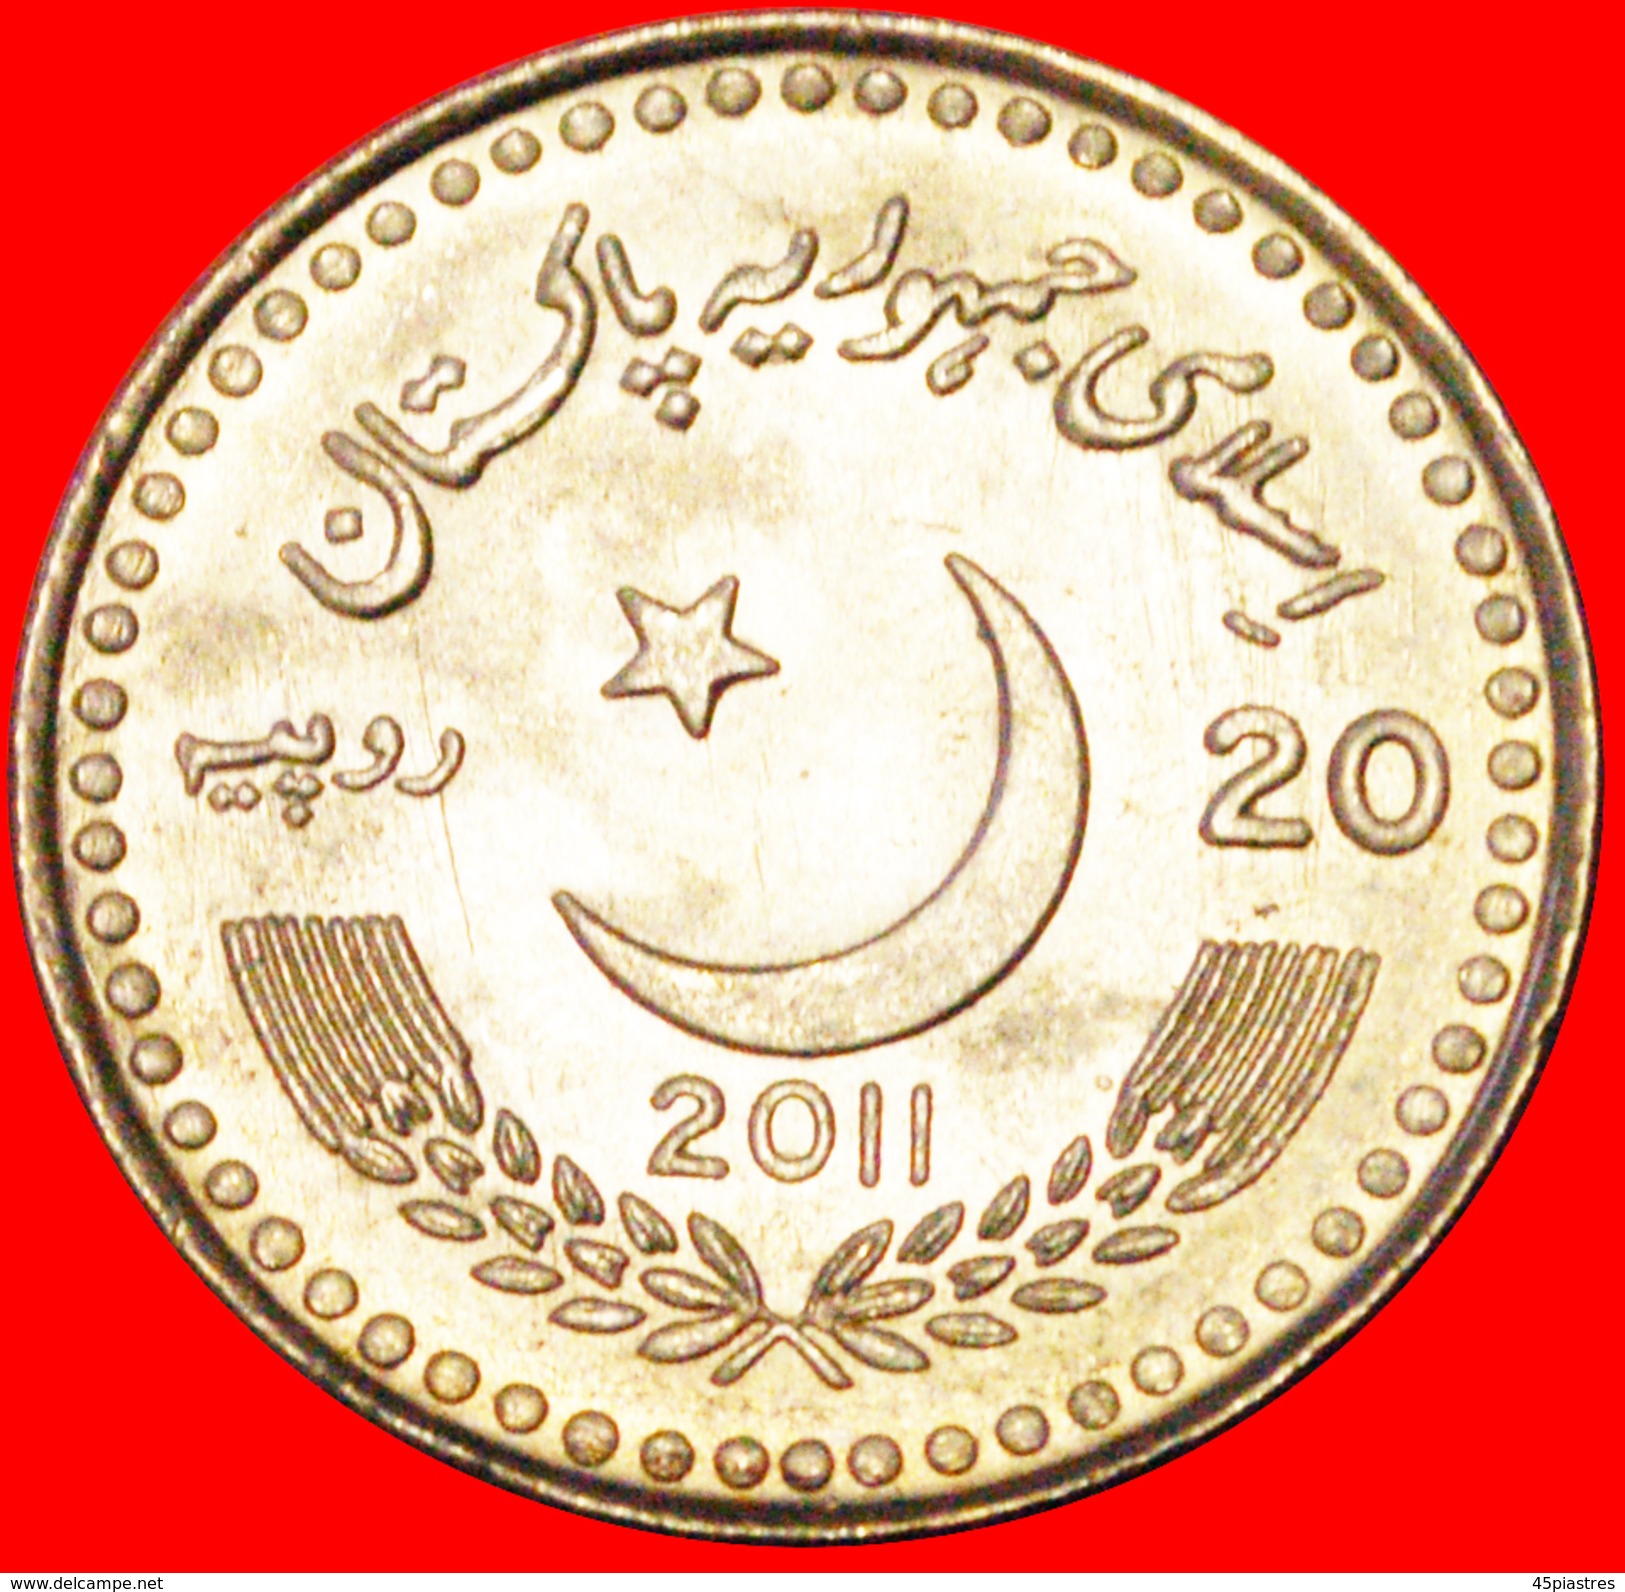 § CHINA 1951: PAKISTAN &#x2605; 20 RUPEES 2011 UNC MINT LUSTER! LOW START &#x2605; NO RESERVE! - Pakistán